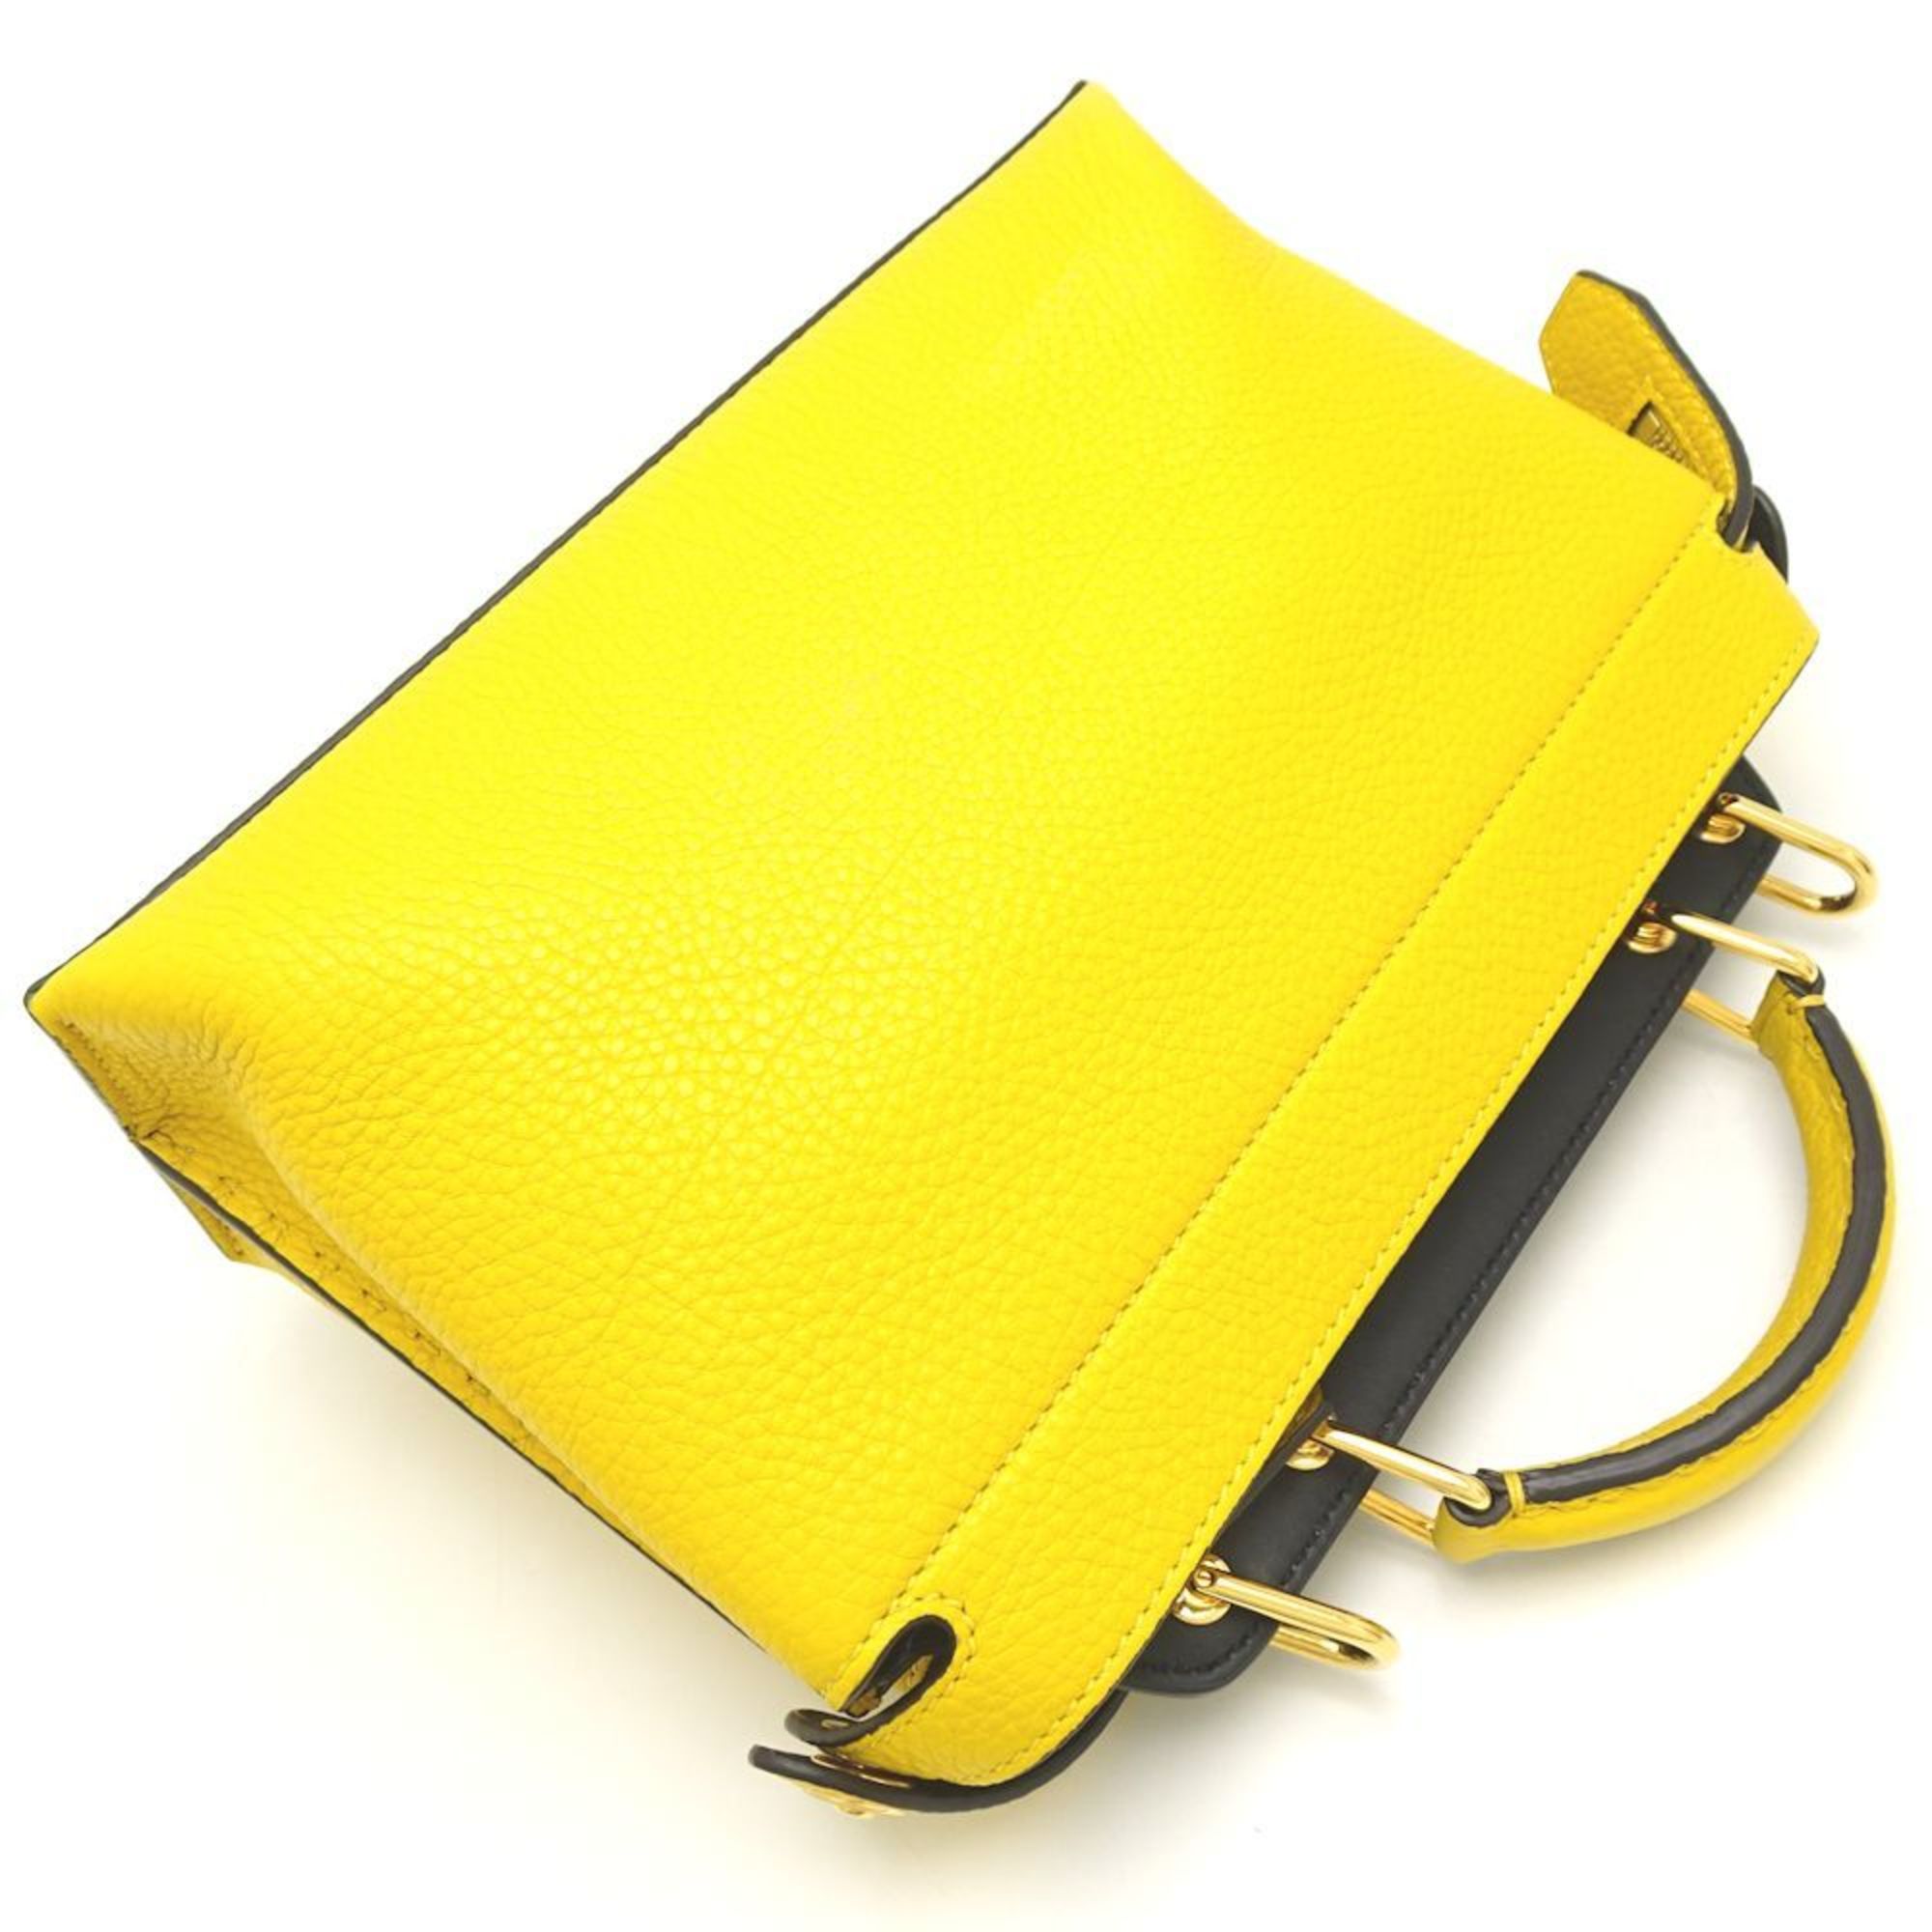 FENDI Peekaboo Iconic Essential 7VA506 2Way Bag Selleria Calf SUNFLOWER Yellow 151551